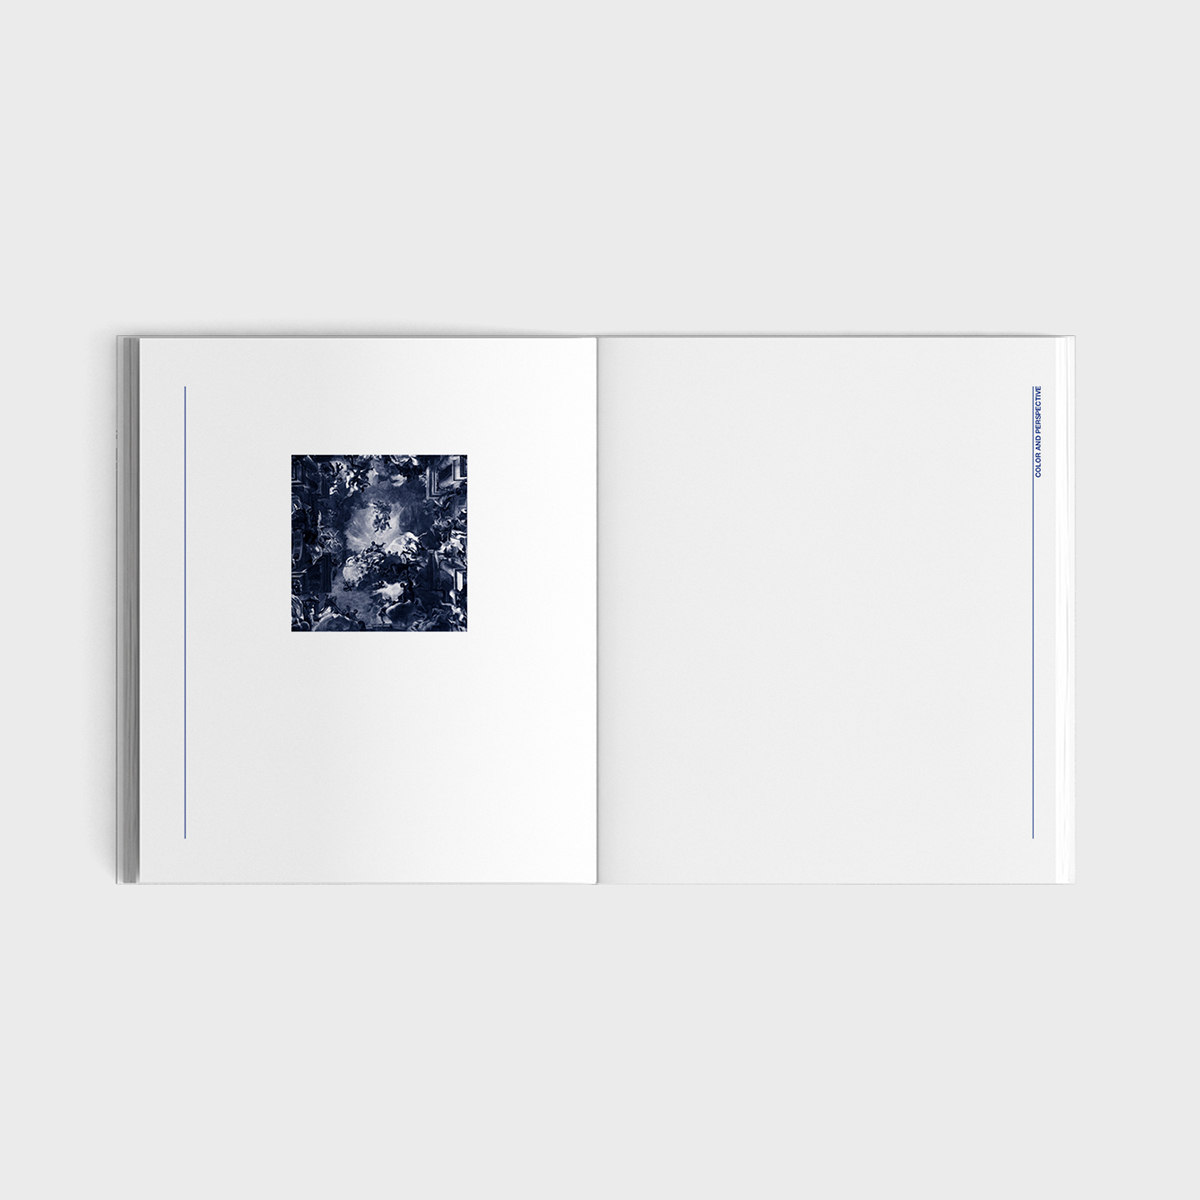 book redesign modernist modern minimal helvetica publication design publication ray smith art AUT University aut grids vertical lines